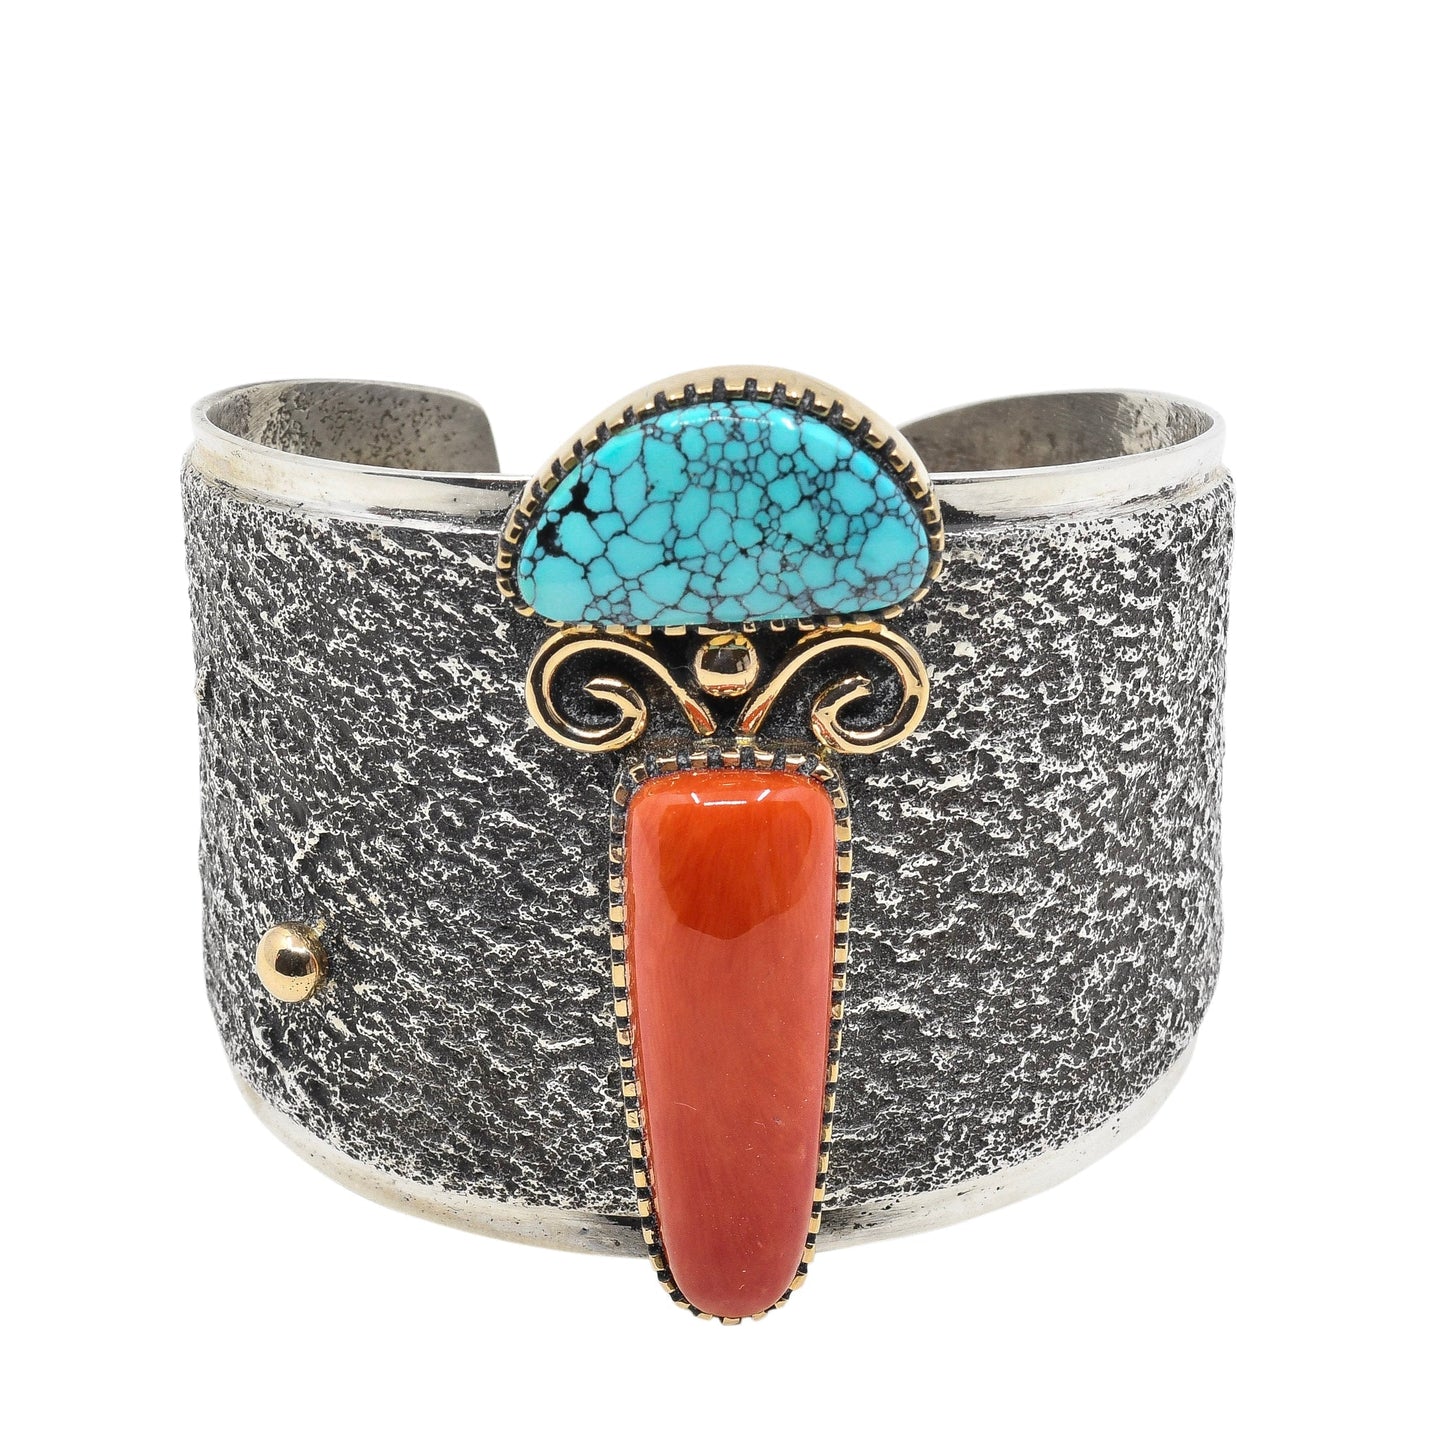 Edison Cummings Bracelet of Turquoise and Coral - Turquoise & Tufa